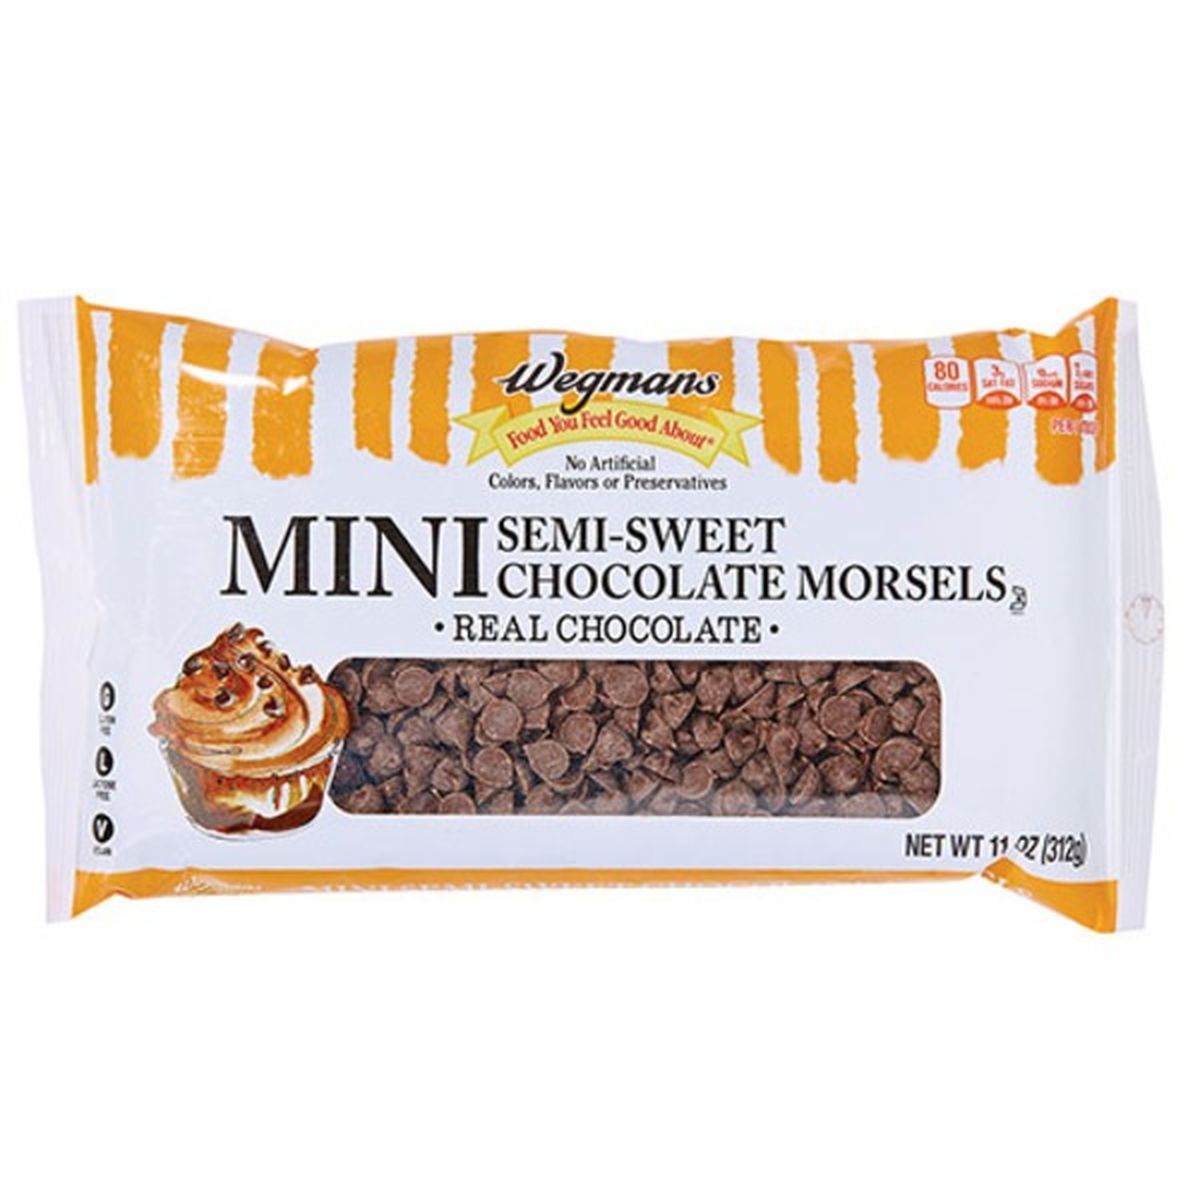 Calories in Wegmans Mini Semi-Sweet Chocolate Morsels